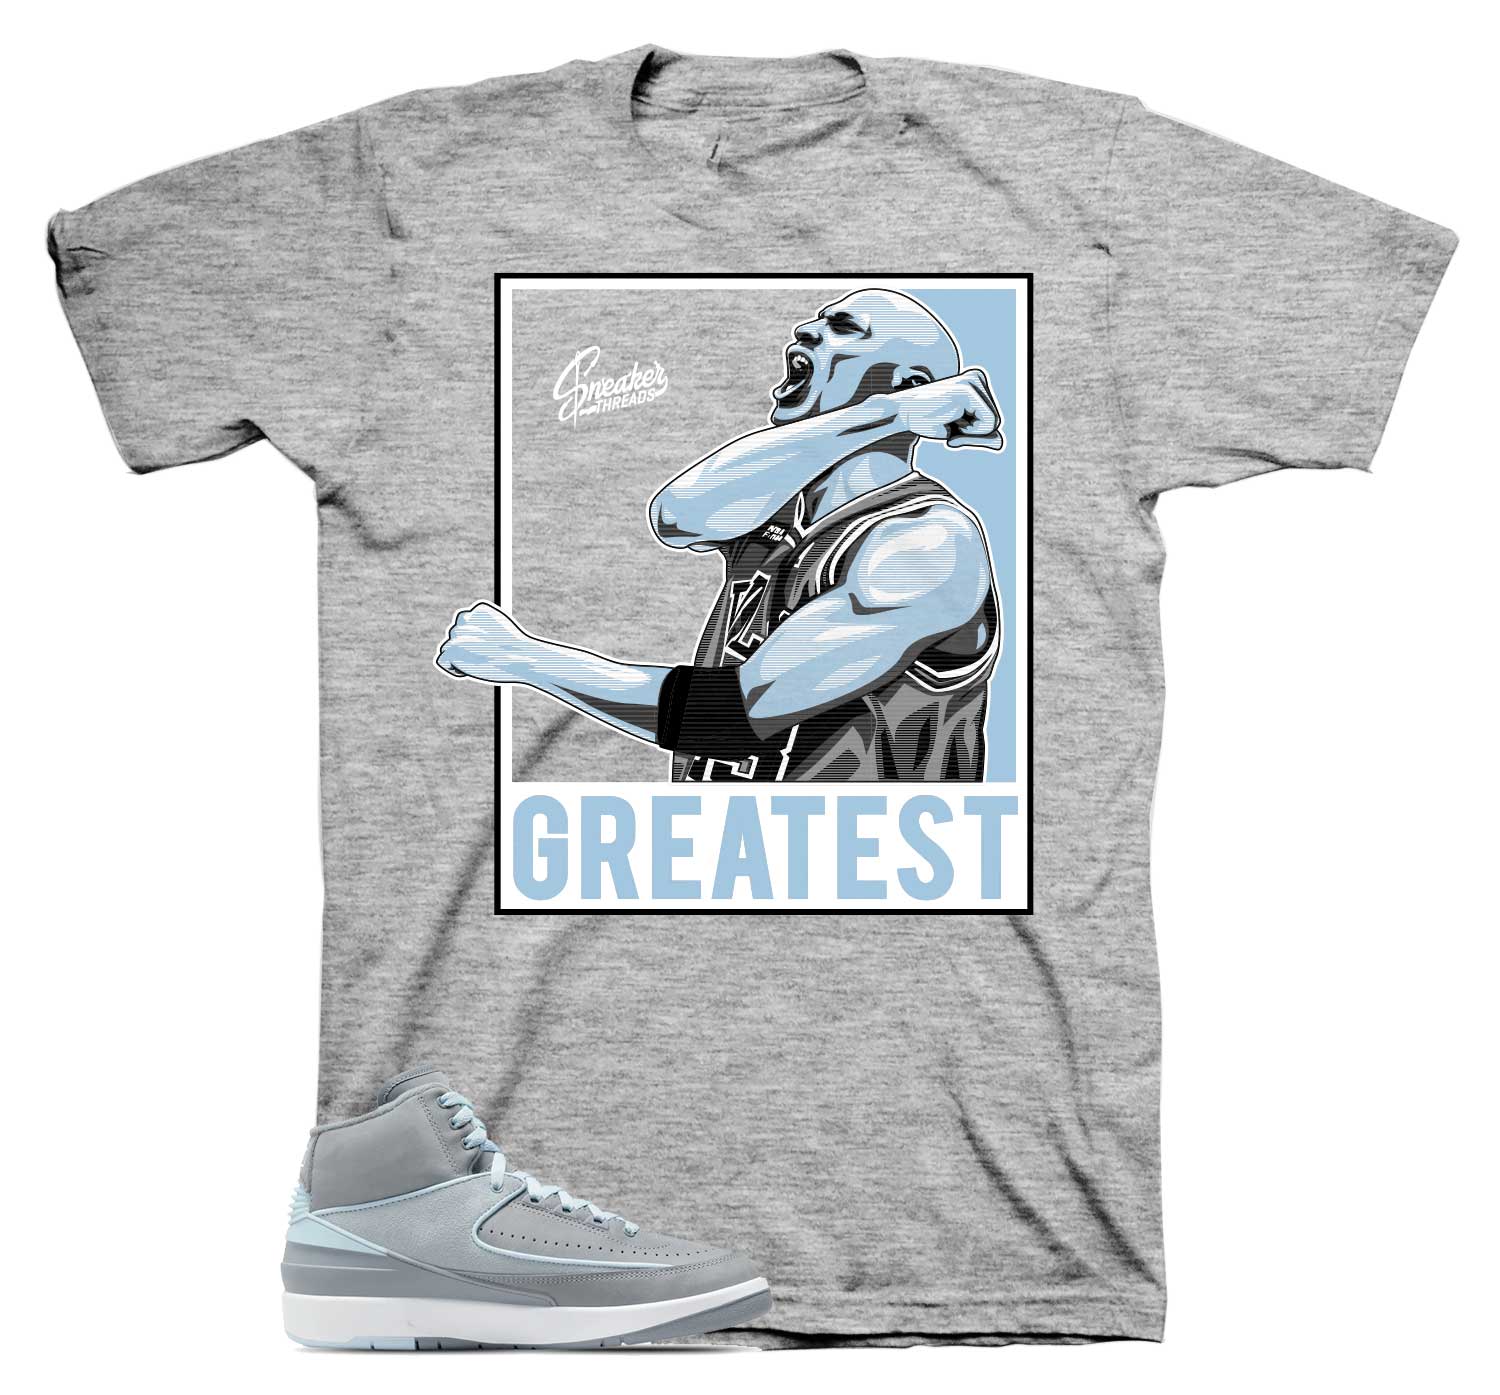 Retro 2 Cool Grey Shirt - Greatest - Heather Grey